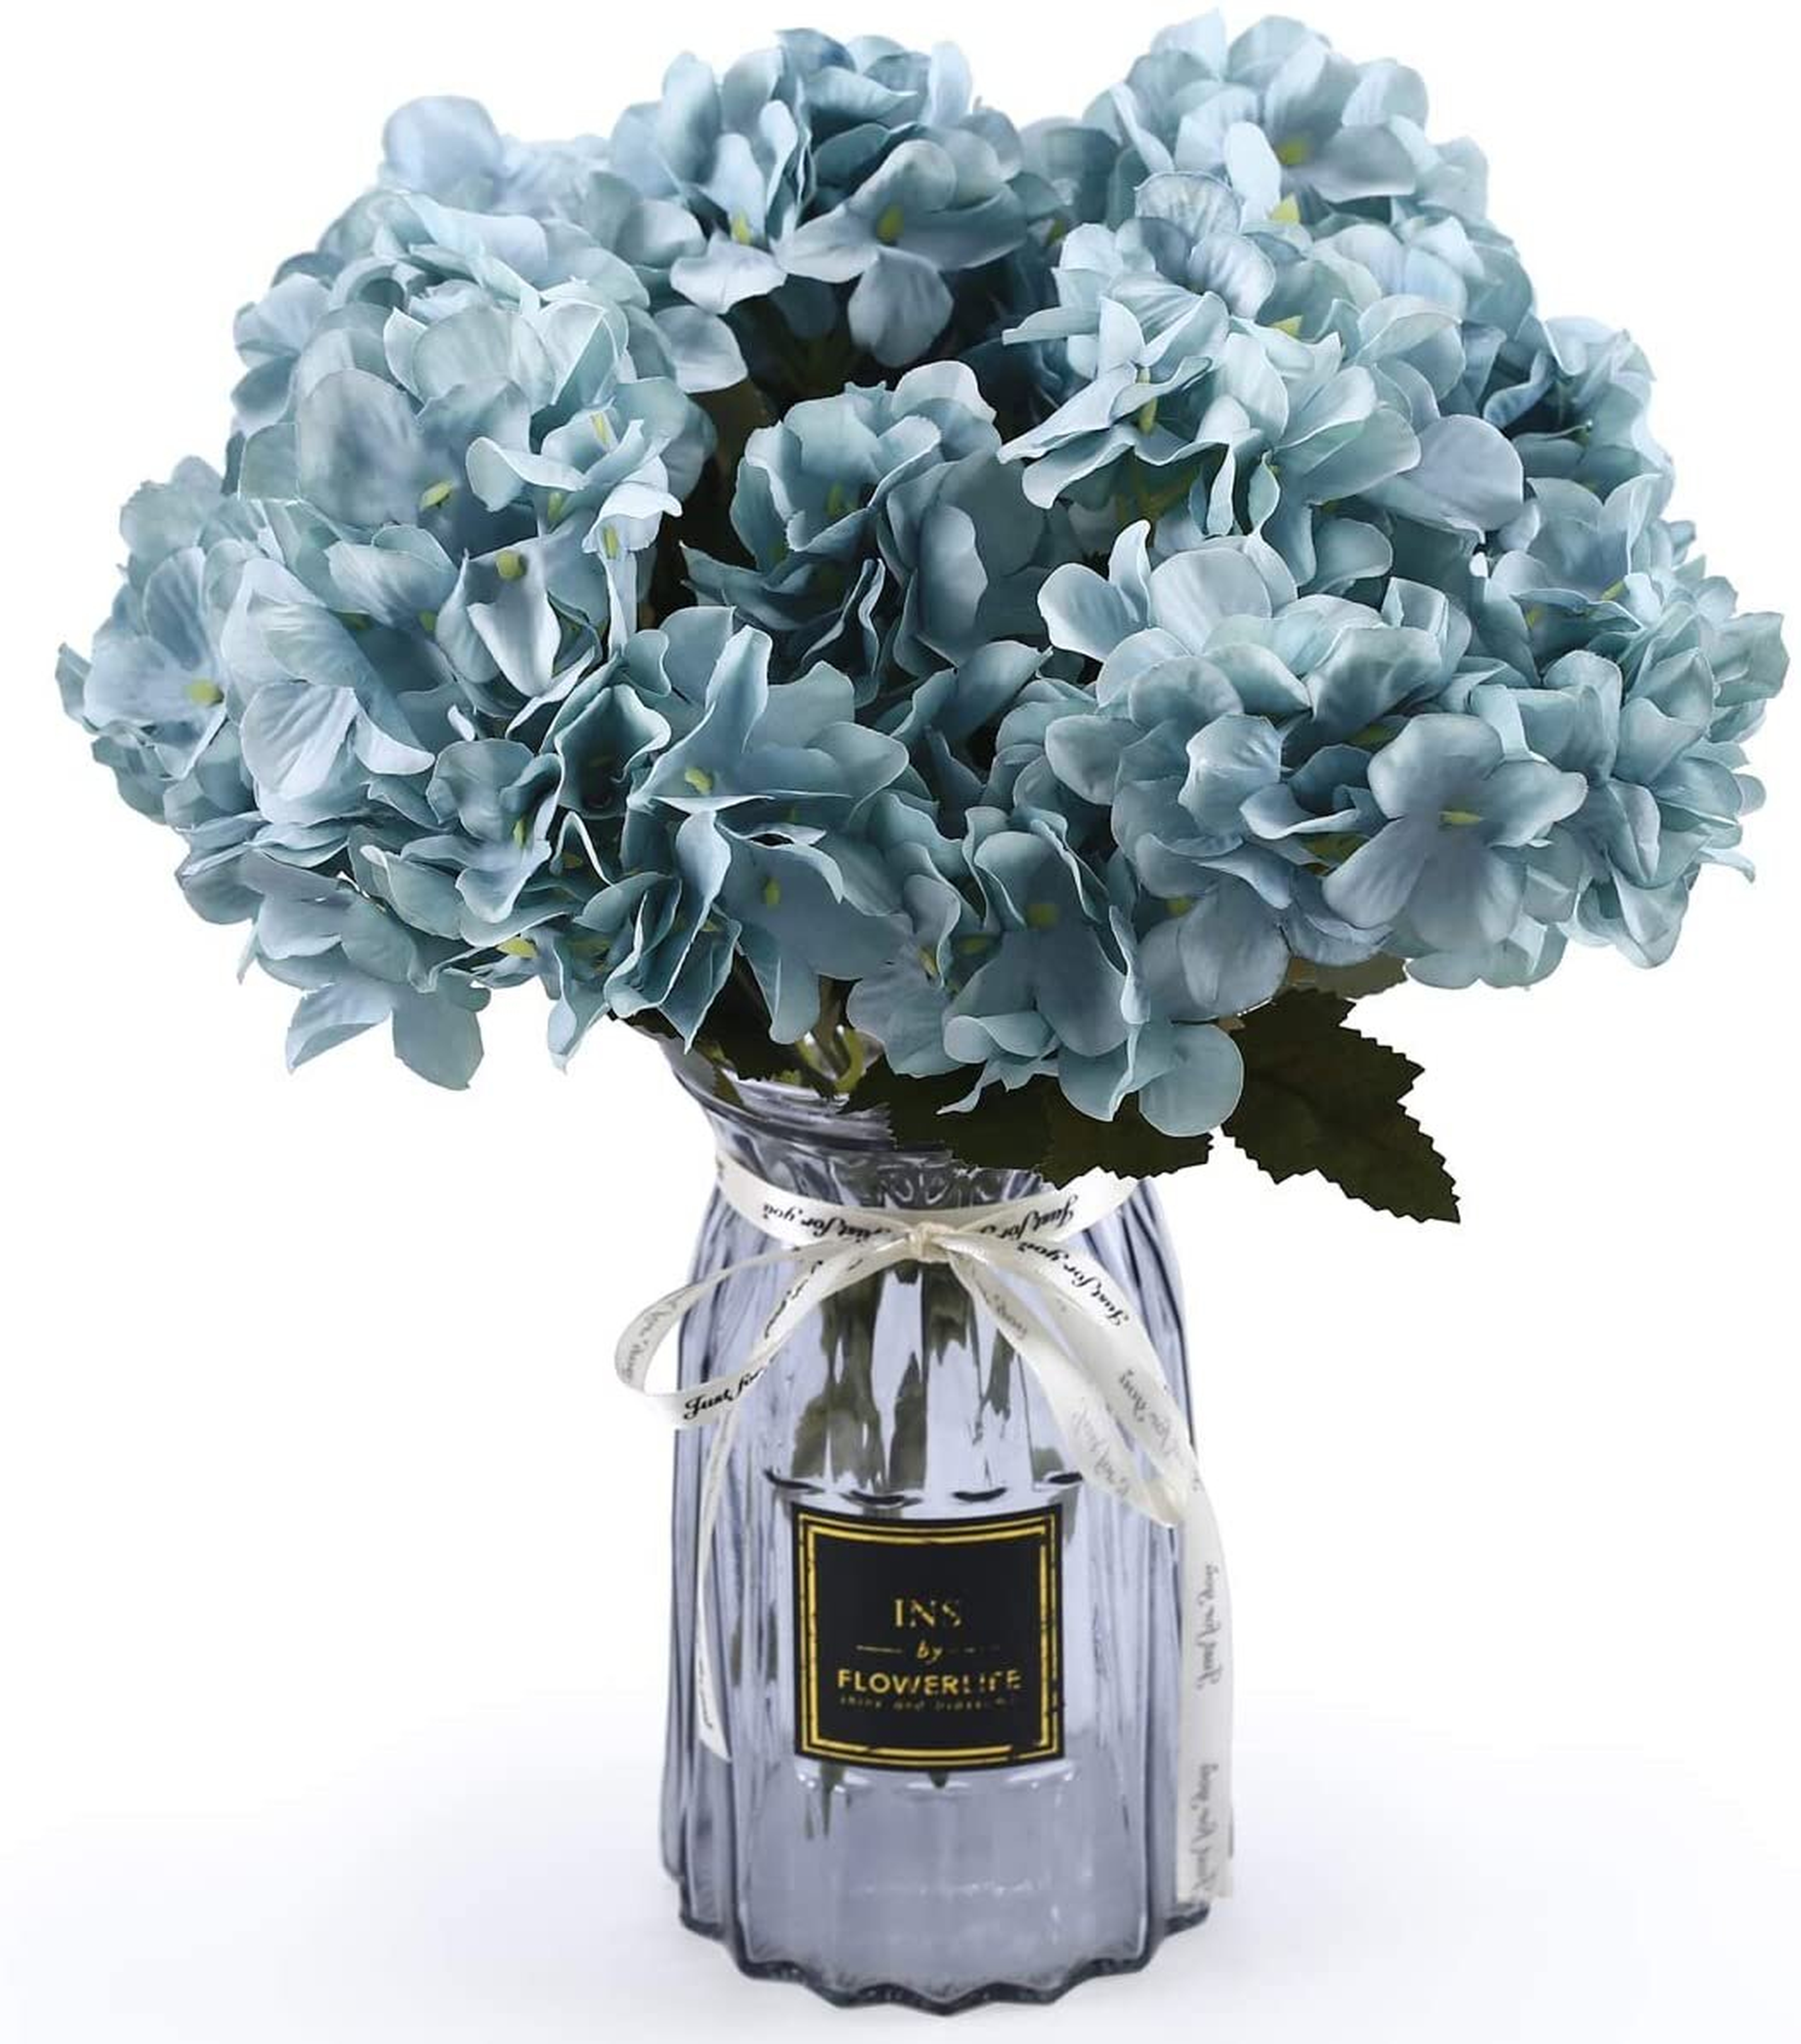 4 Packs White Silk Hydrangea Flowers With Vase DIY Artificial Hydrangea Flowers Bouquets Arrangement Centerpiece For Weddings, Baby Showers, Birthday Parties, Home Office Decor - Wayfair